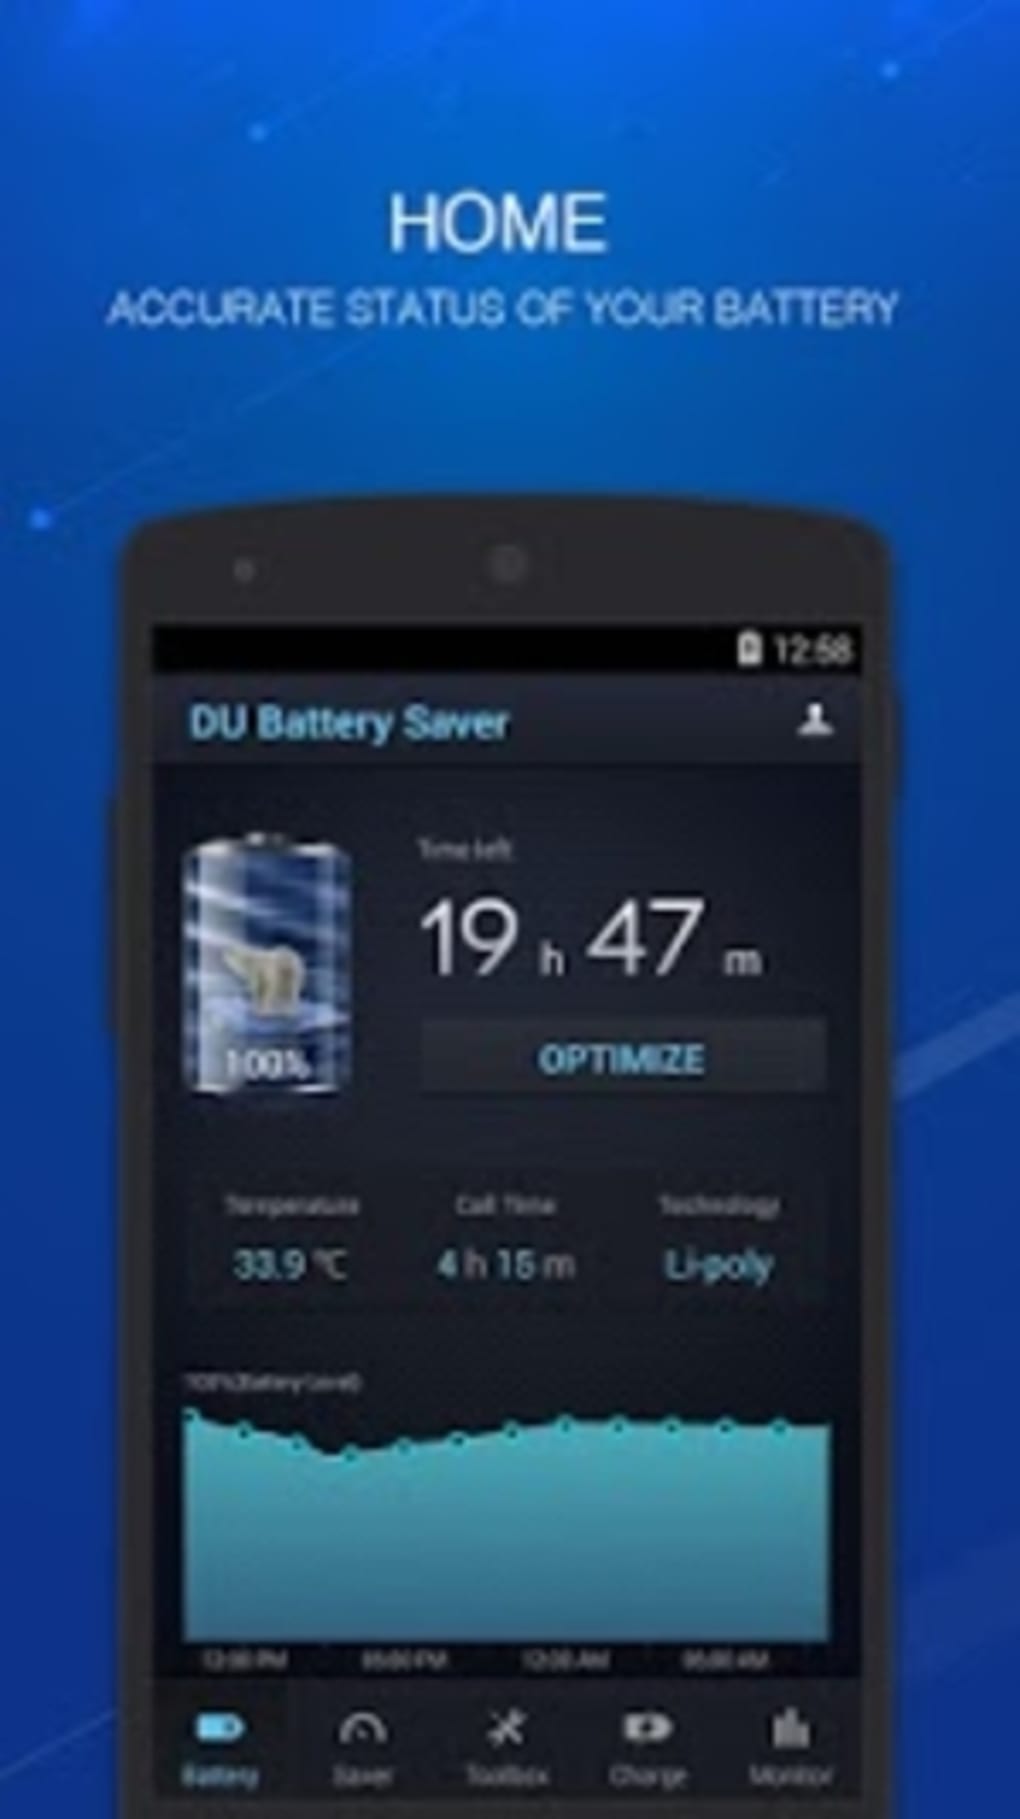 download du battery saver apk file for android